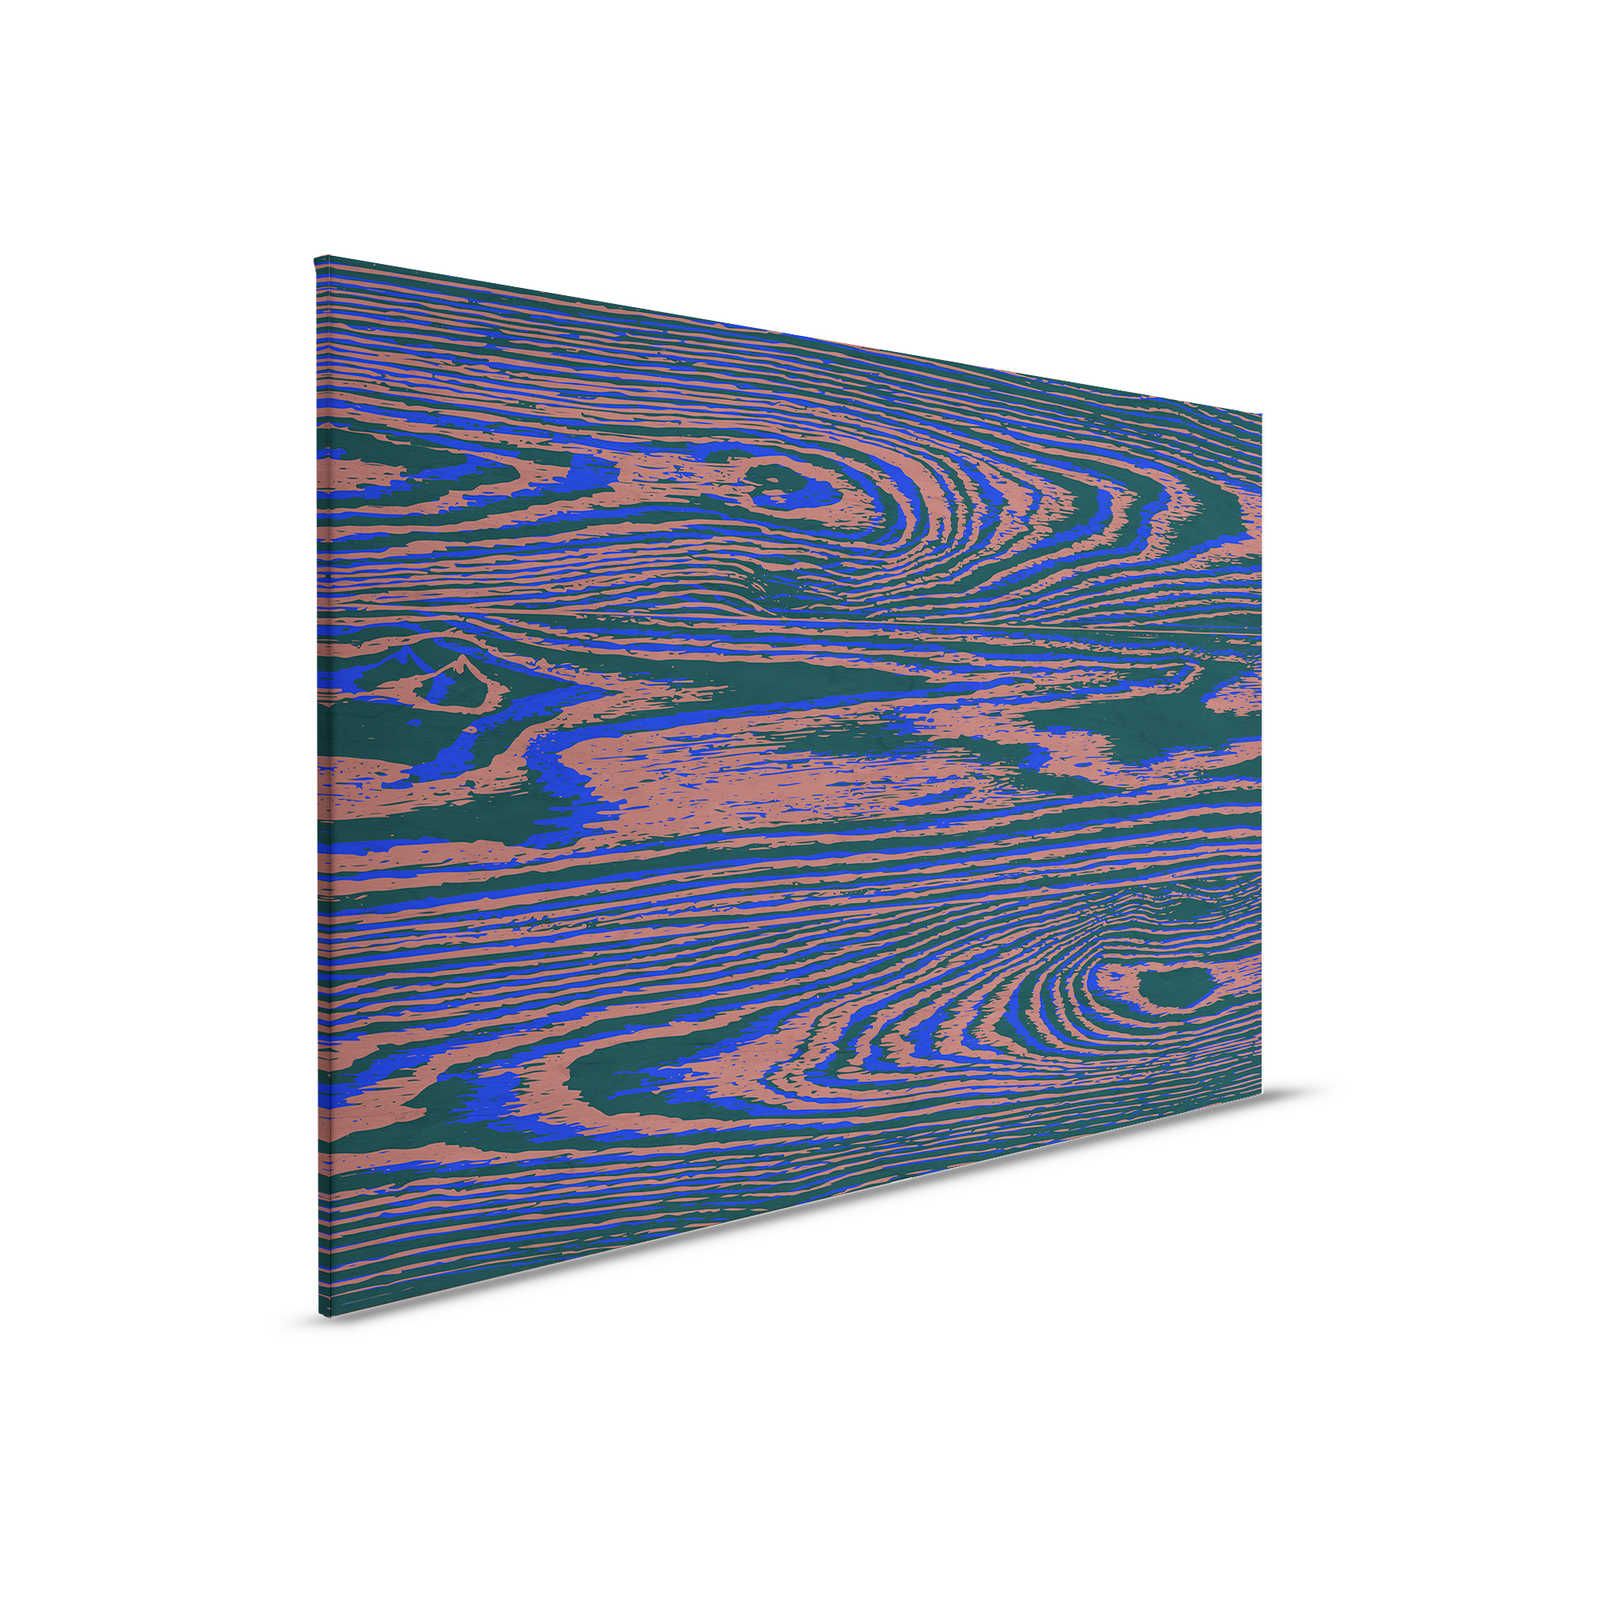         Kontiki 3 - Canvas painting Neon Wood Grain, Purple & Black - 0.90 m x 0.60 m
    